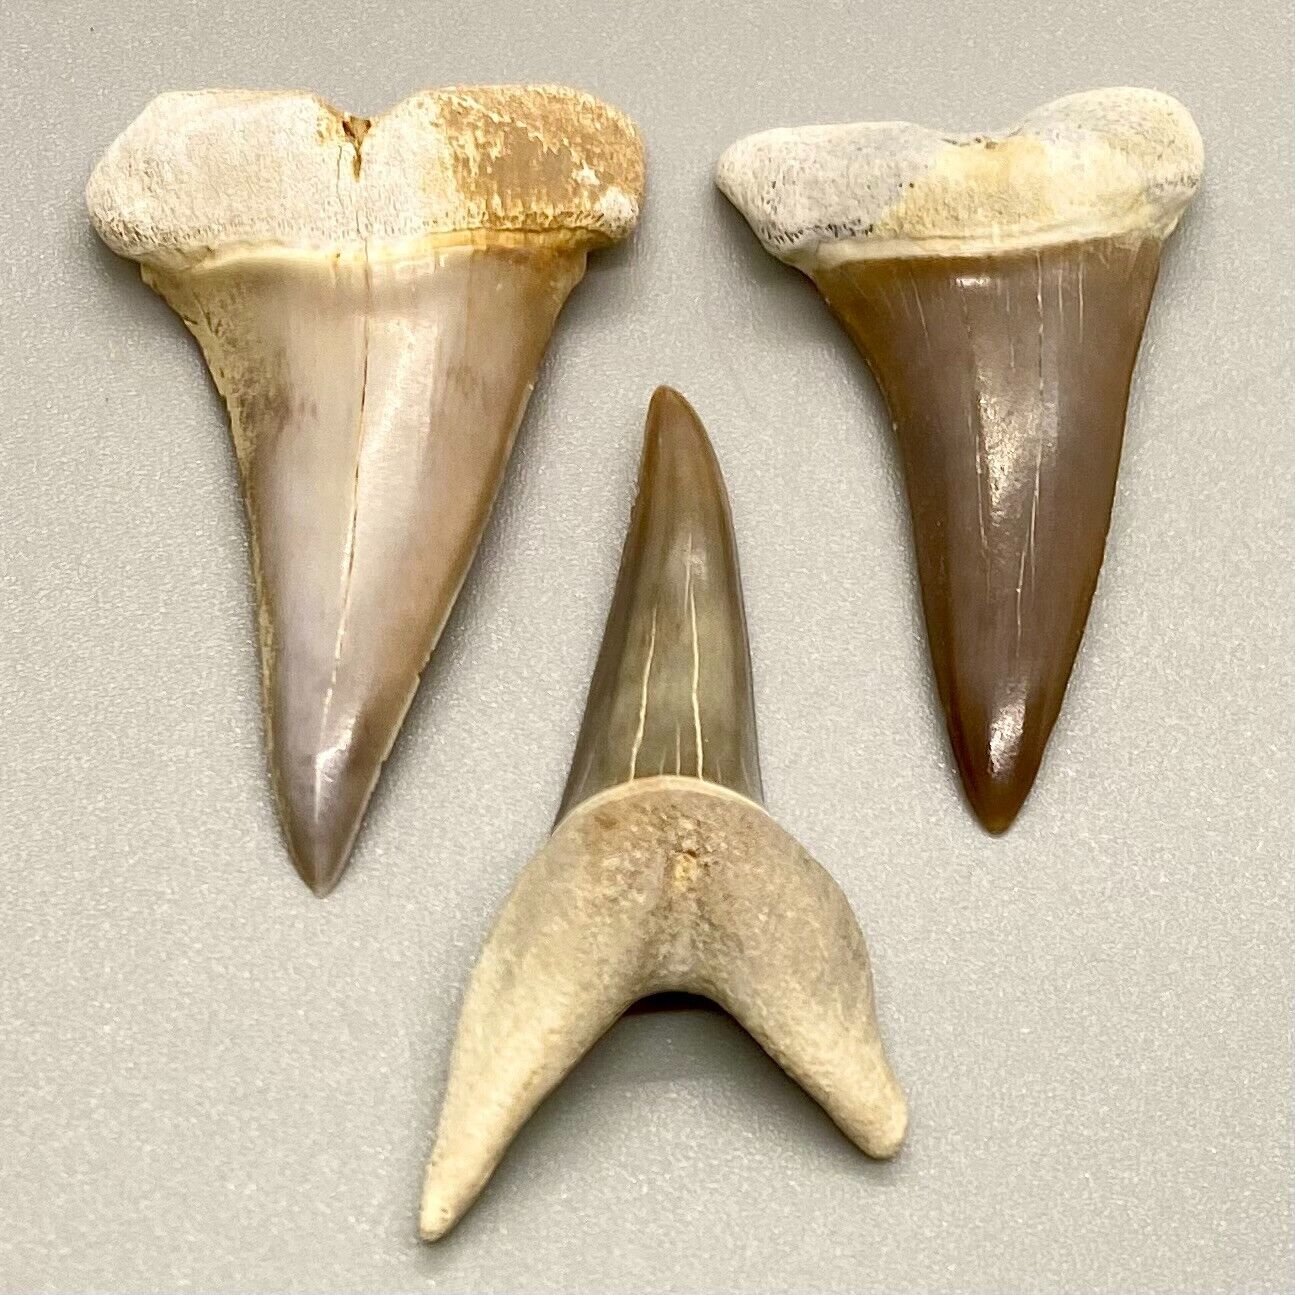 Group - Three GORGEOUS and colorful Fossil EXTINCT MAKO Shark Teeth - Peru